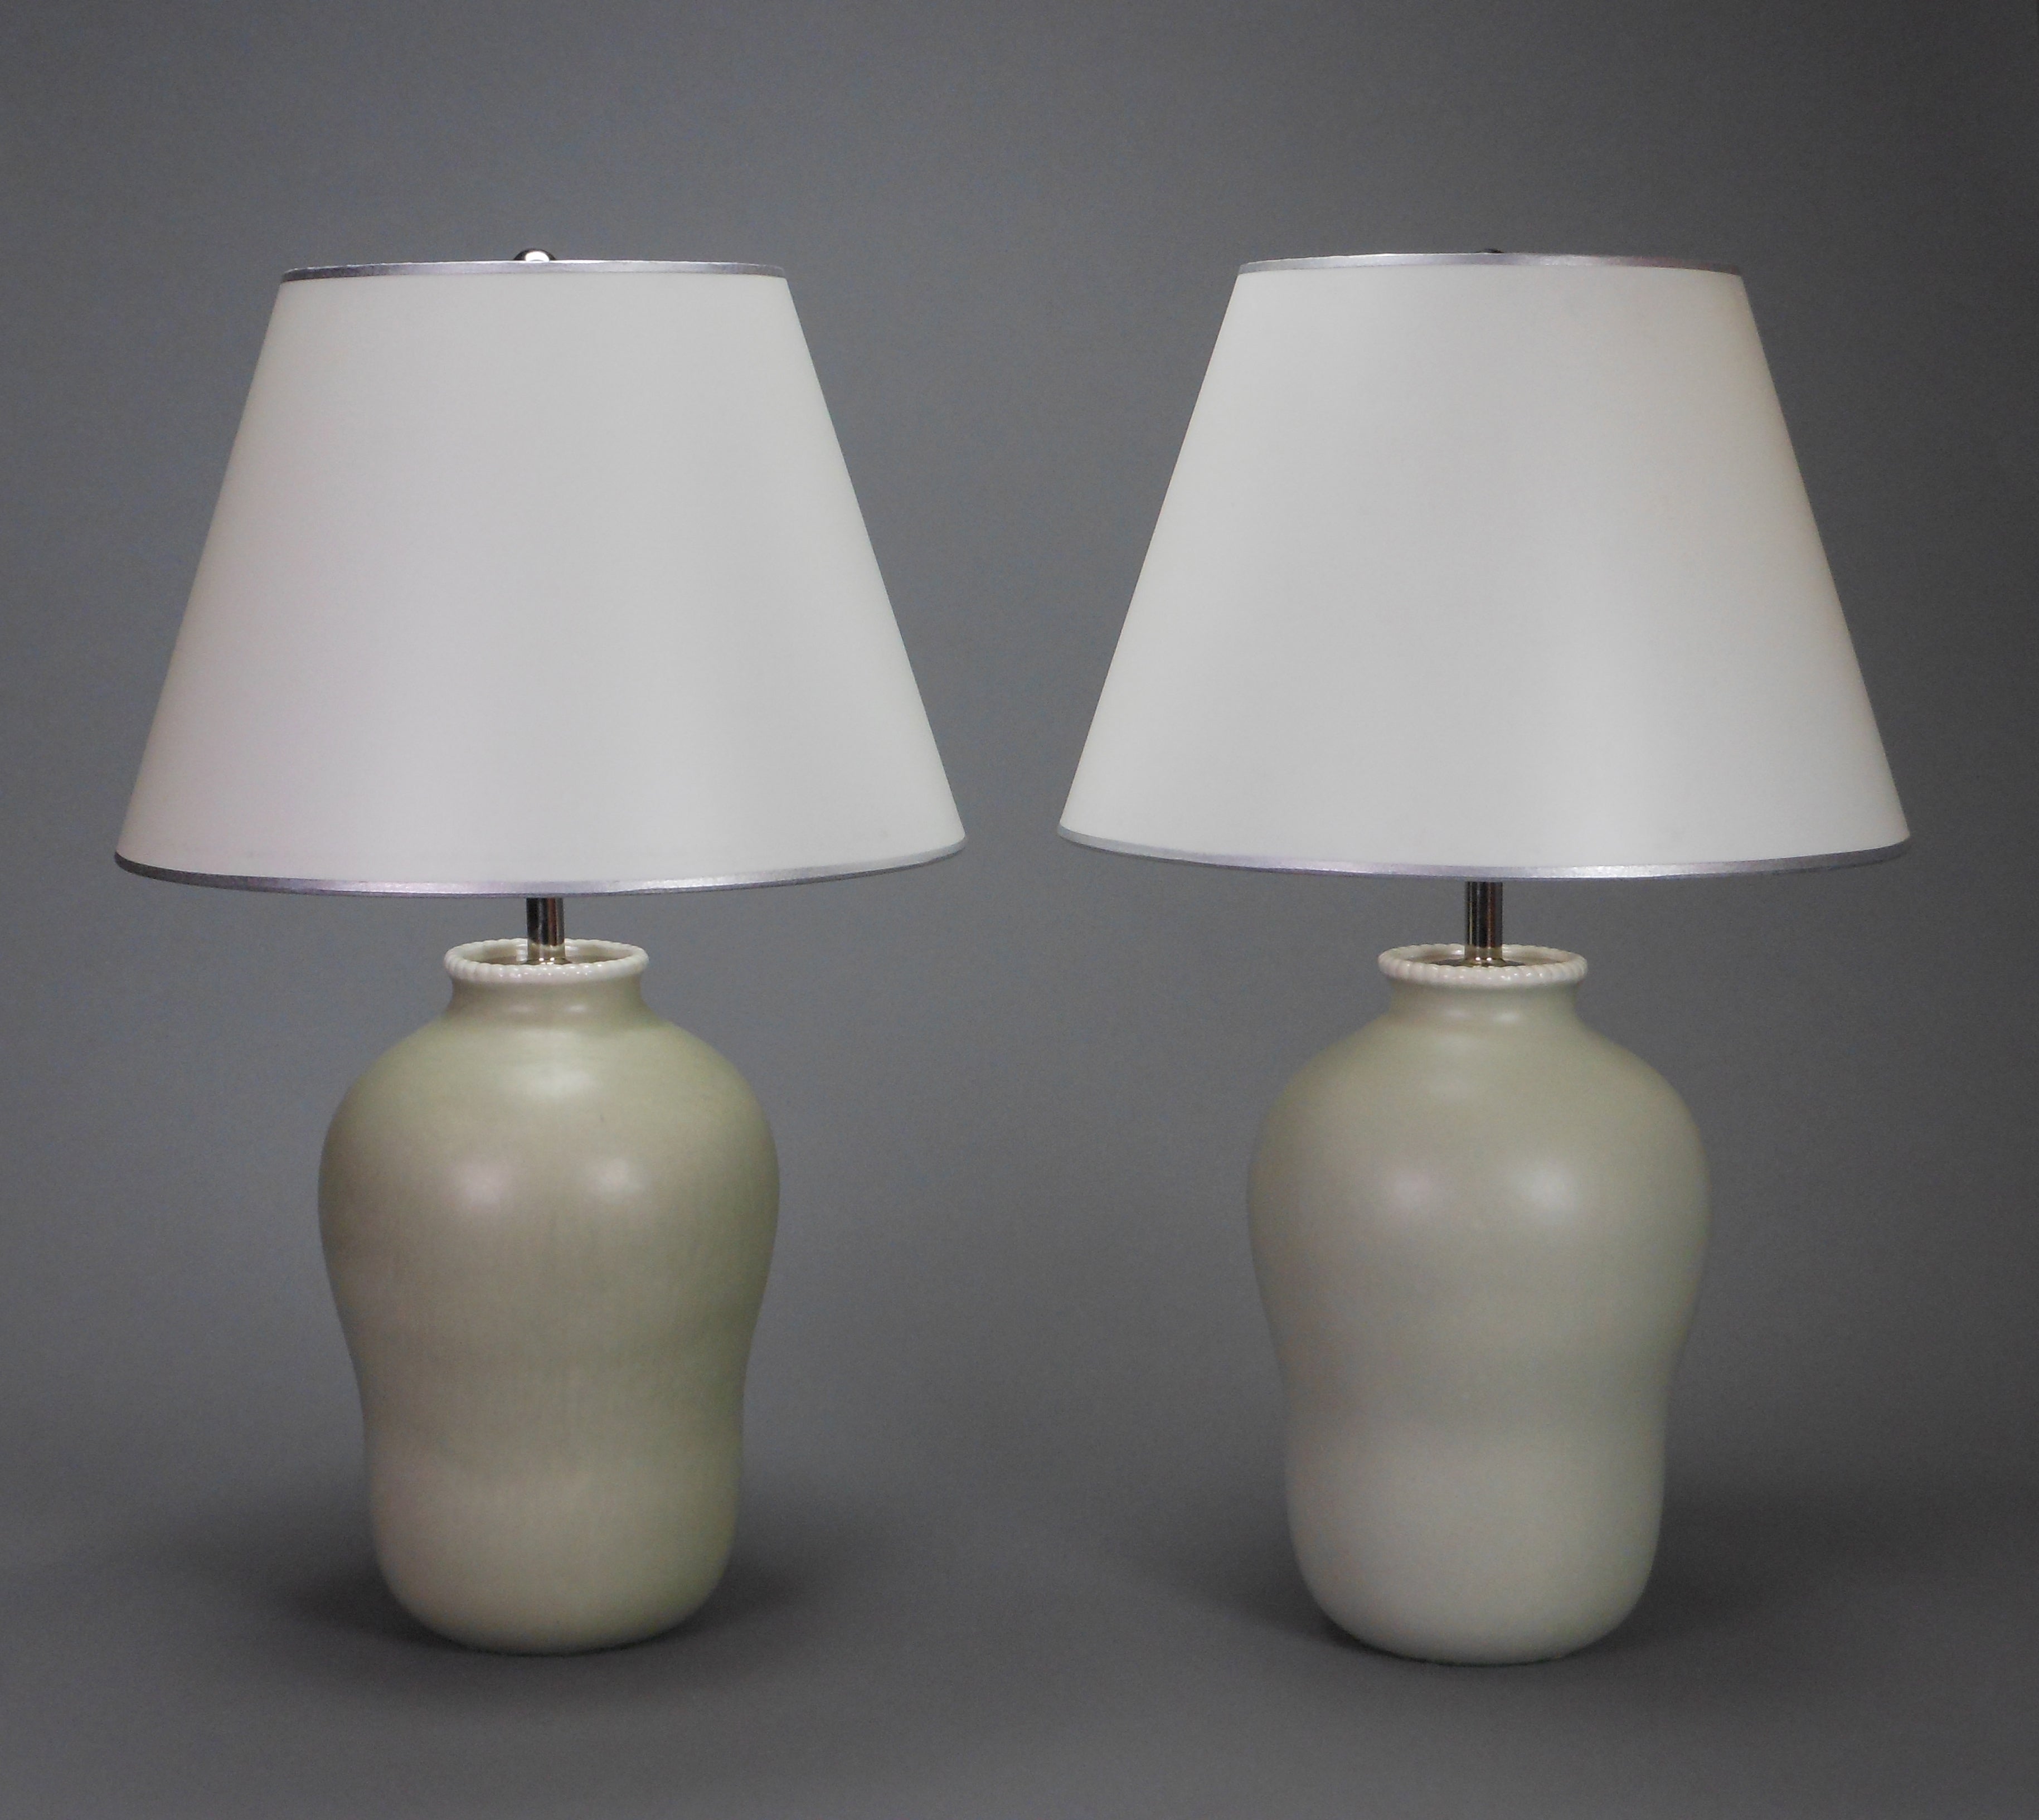 Pair of Italian Dove Gray Ceramic Vases, Now Lamps by Richard-Ginori